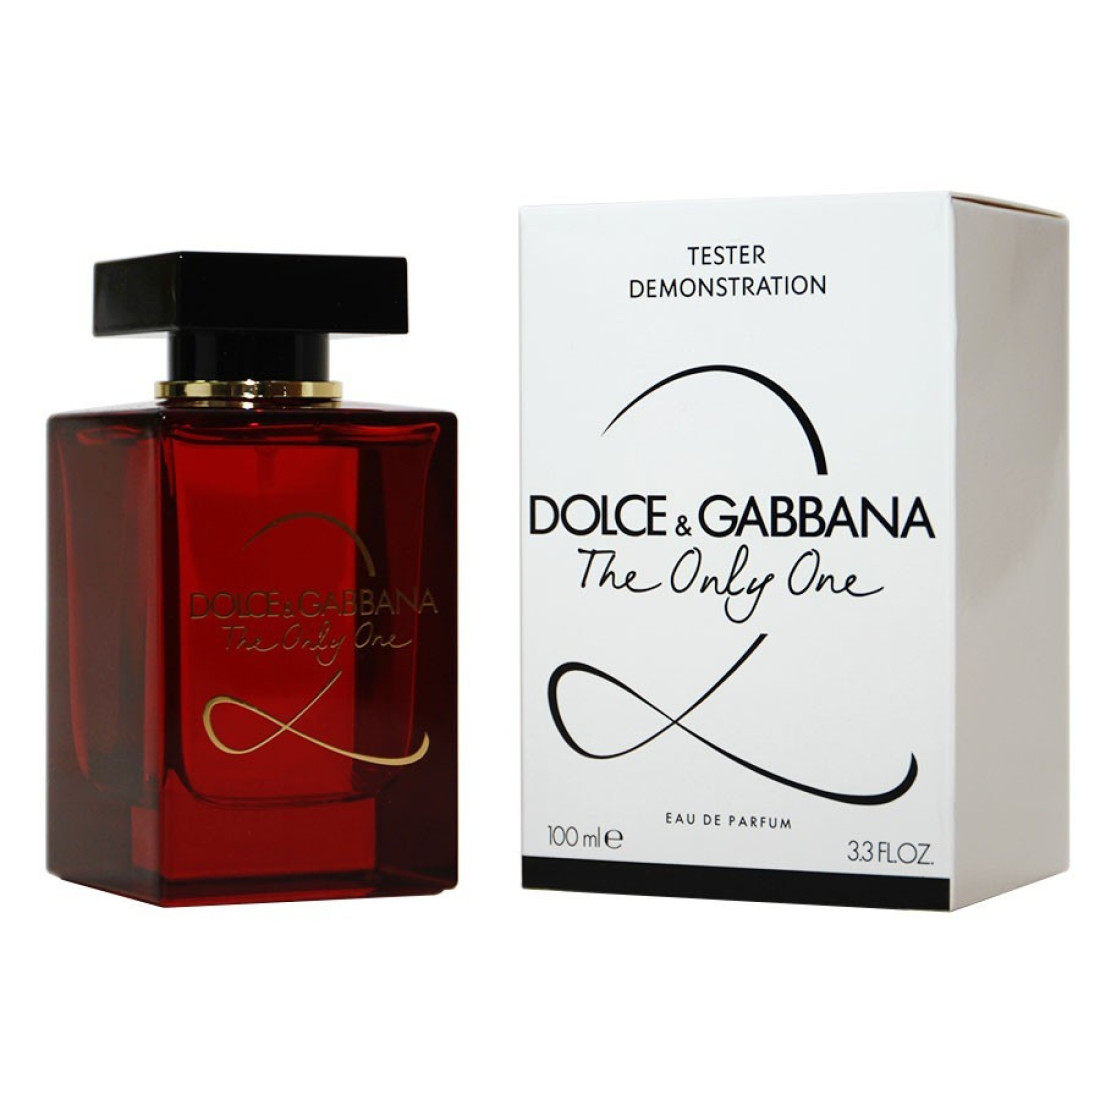 Тестер дольче габбана. Dolce& Gabbana the only one 2 EDP, 100 ml. Dolce Gabbana the only one 2 100 мл. Dolce & Gabbana the only one, EDP., 100 ml. Dolce Gabbana the only one 100ml.